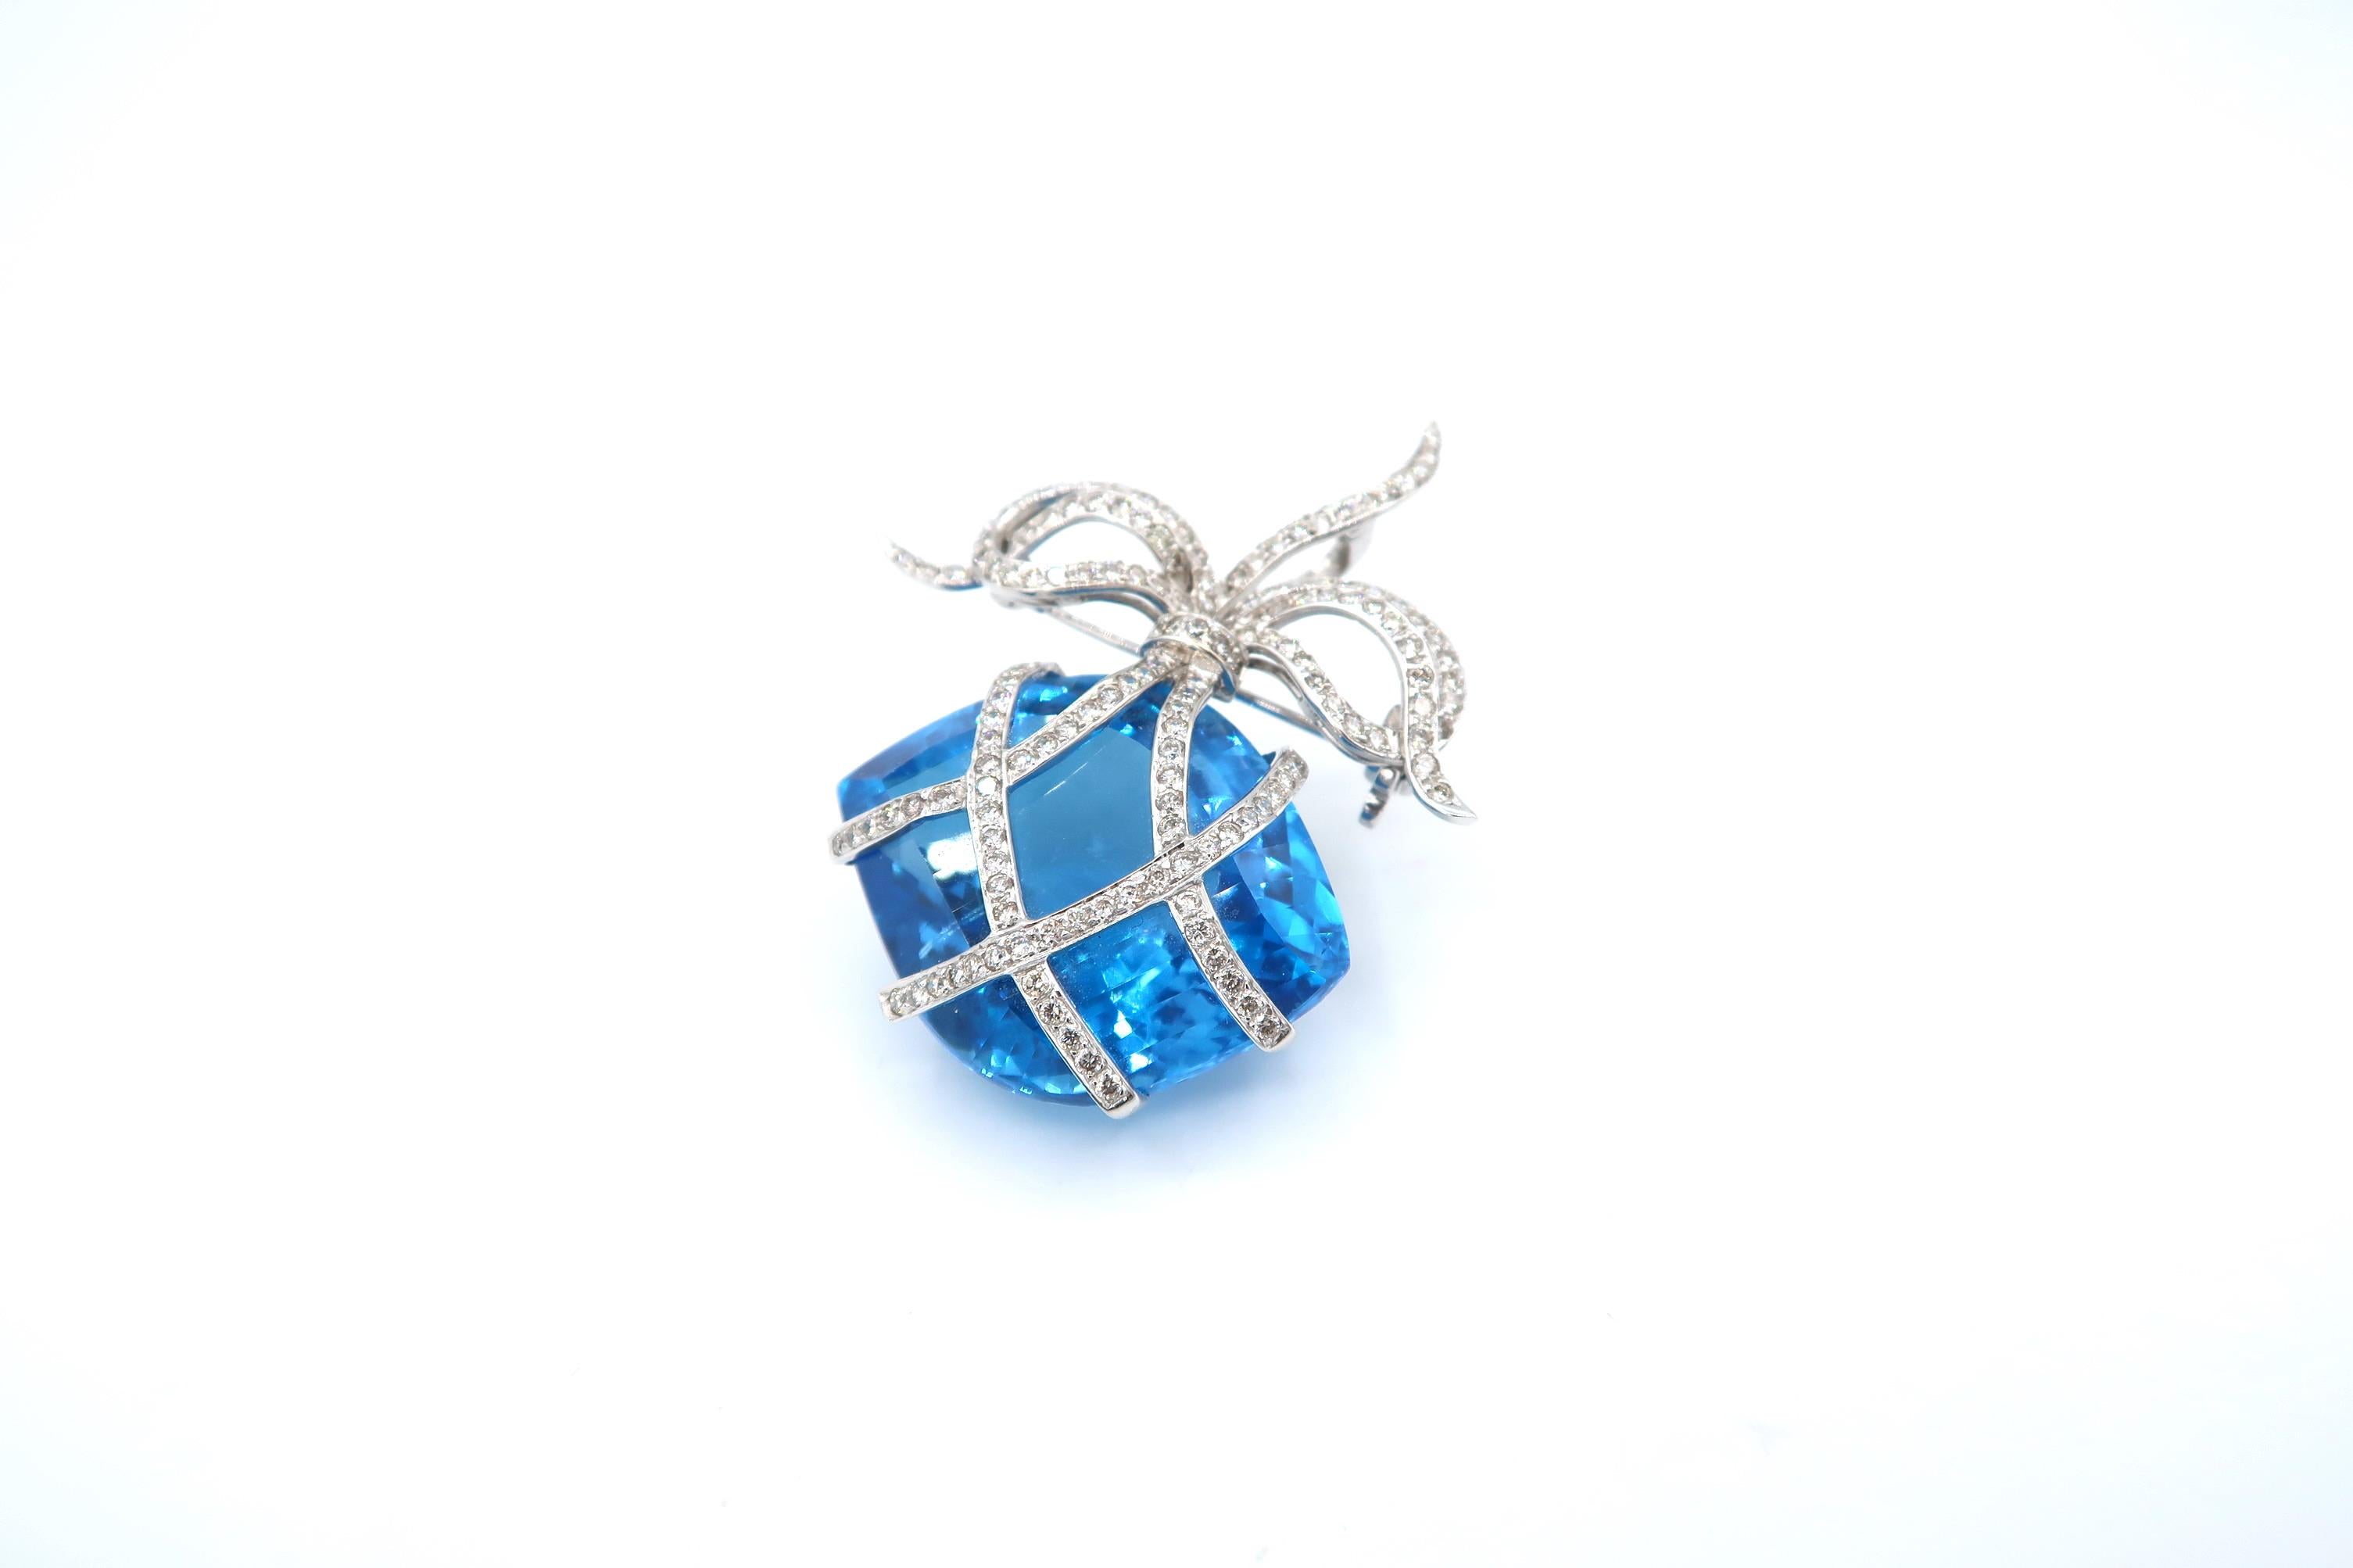 59 Carat Blue Topaz embellished with Diamond Brooch/ Pendant

Blue Topaz: 59cts.
Diamond: 1.81ct.
Gold: 18K 12.22g.